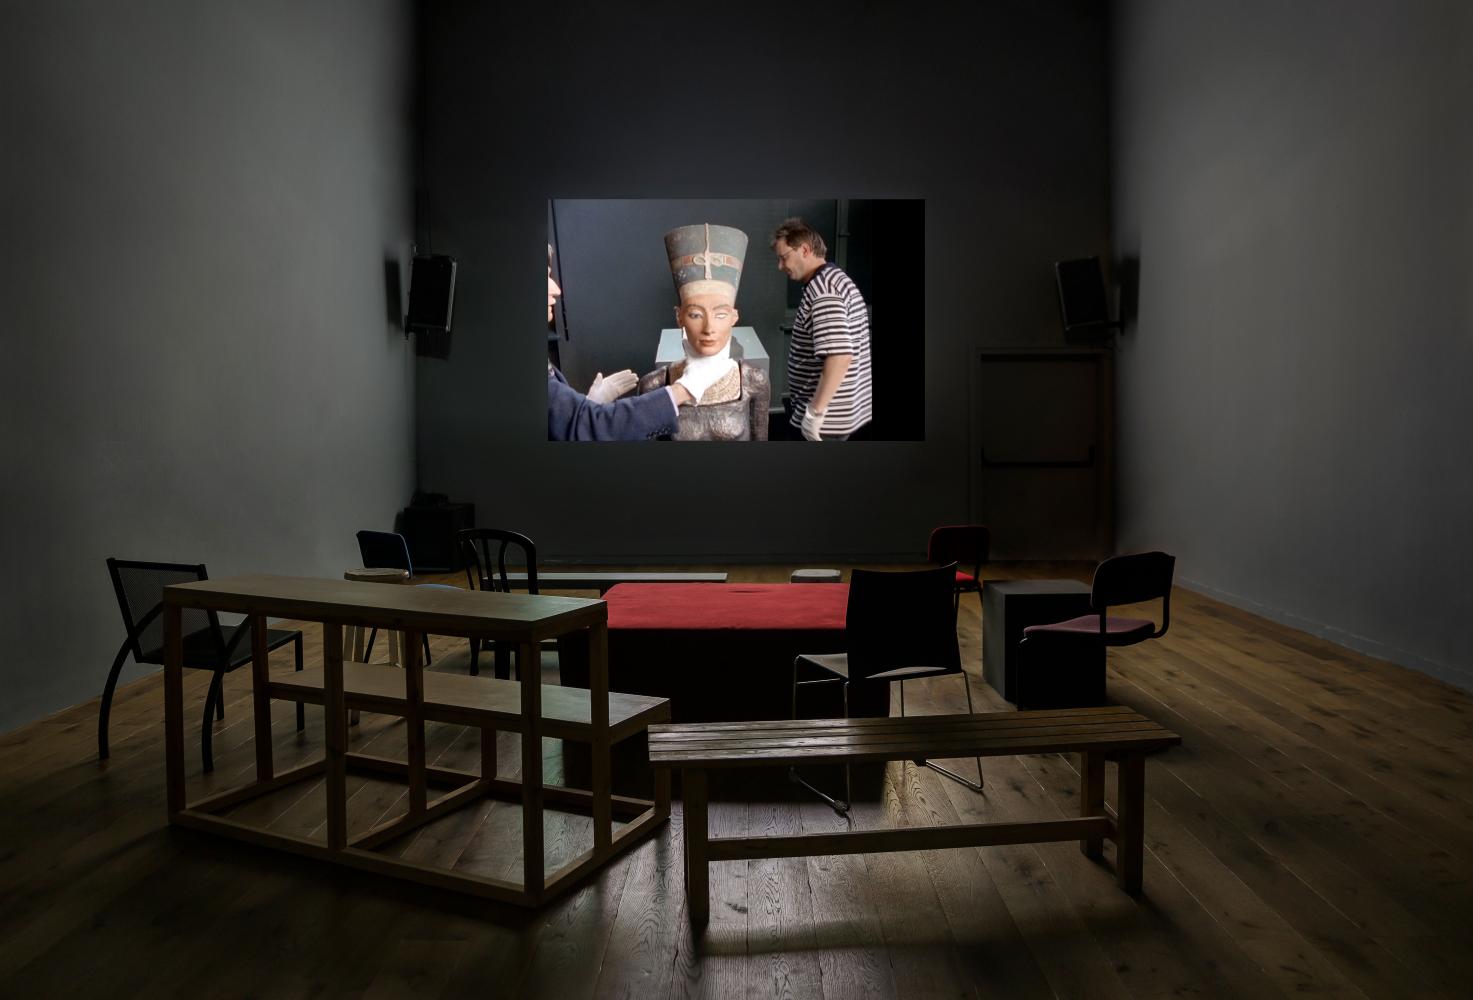 Little Warsaw, The Body of Nefertiti, 2003. Teil des Video-Programms der Marc Schimmel Multipurpose Gallery in der Ausstellung "Not in my name" im CCA Tel Aviv-Yafo, 2022